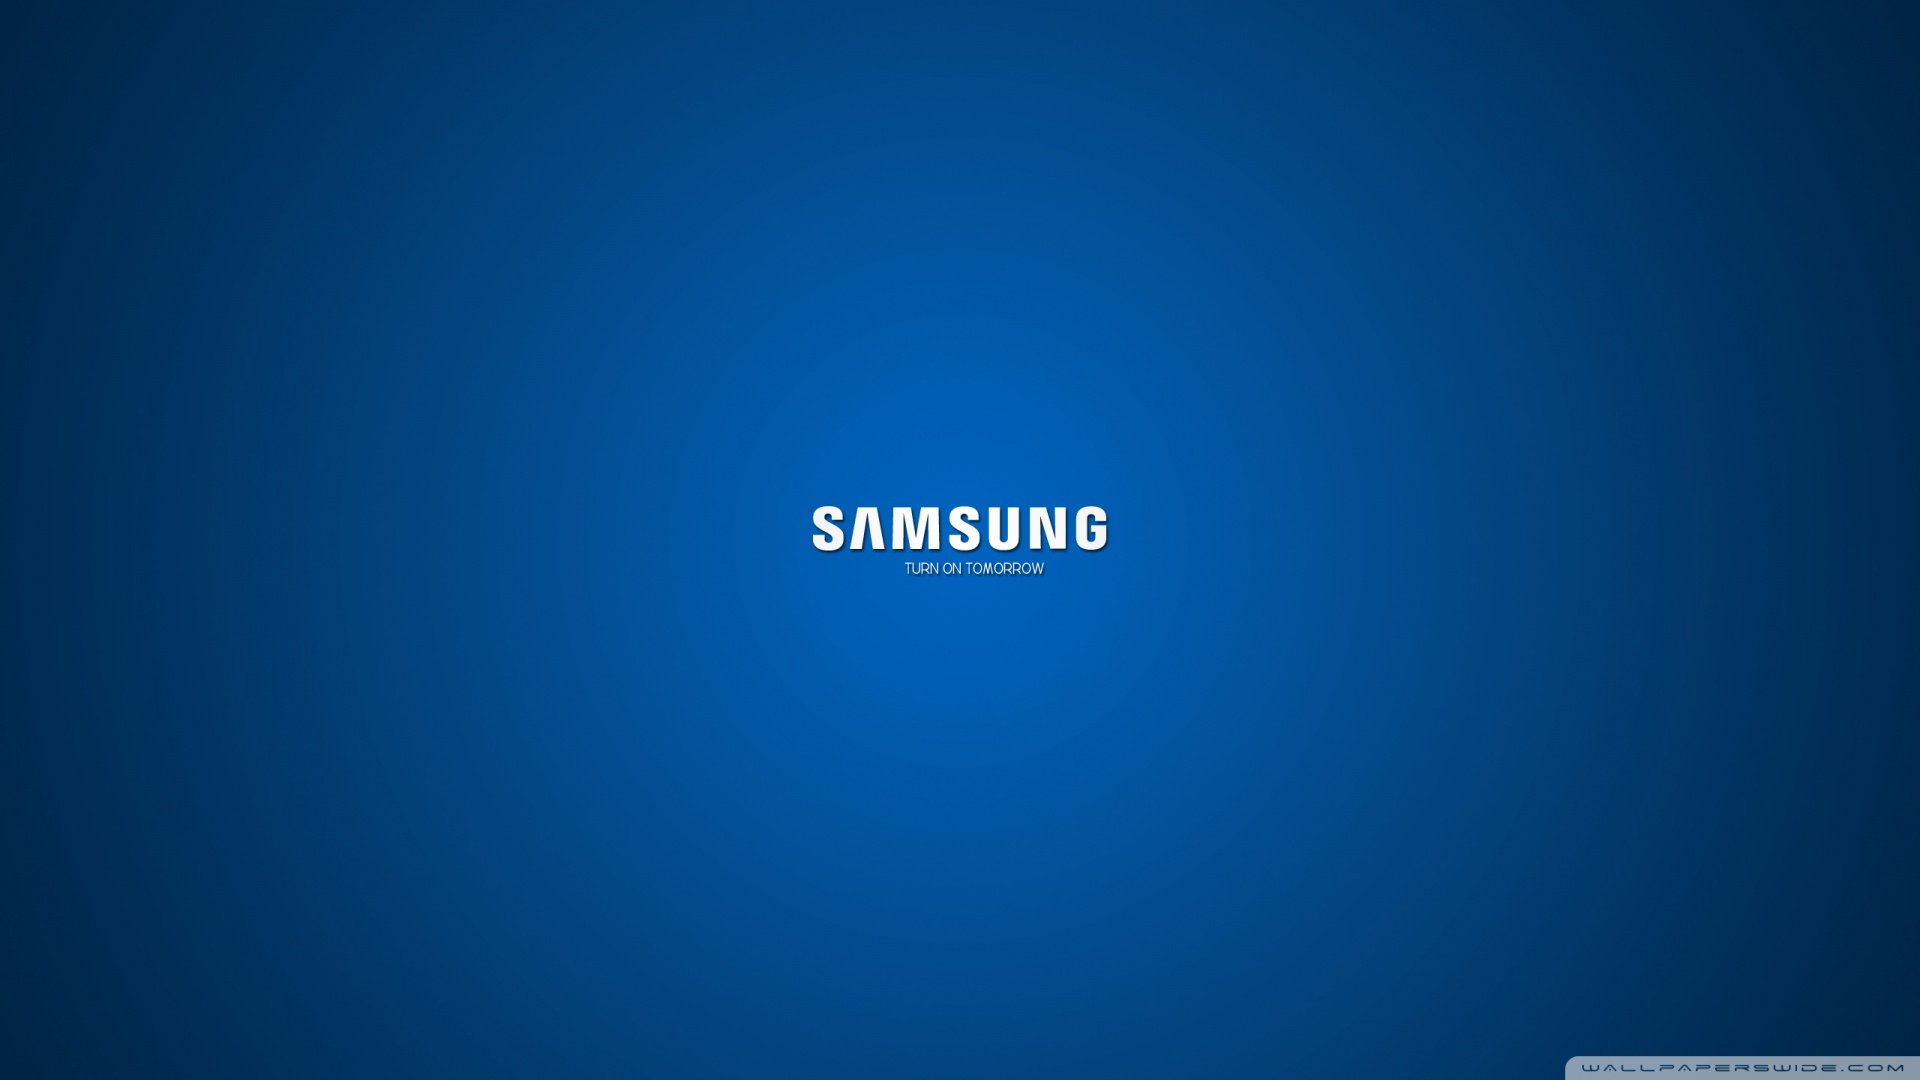 Samsung Turn On Tomorrow Wallpaper 1920x1080 Samsung Turn On